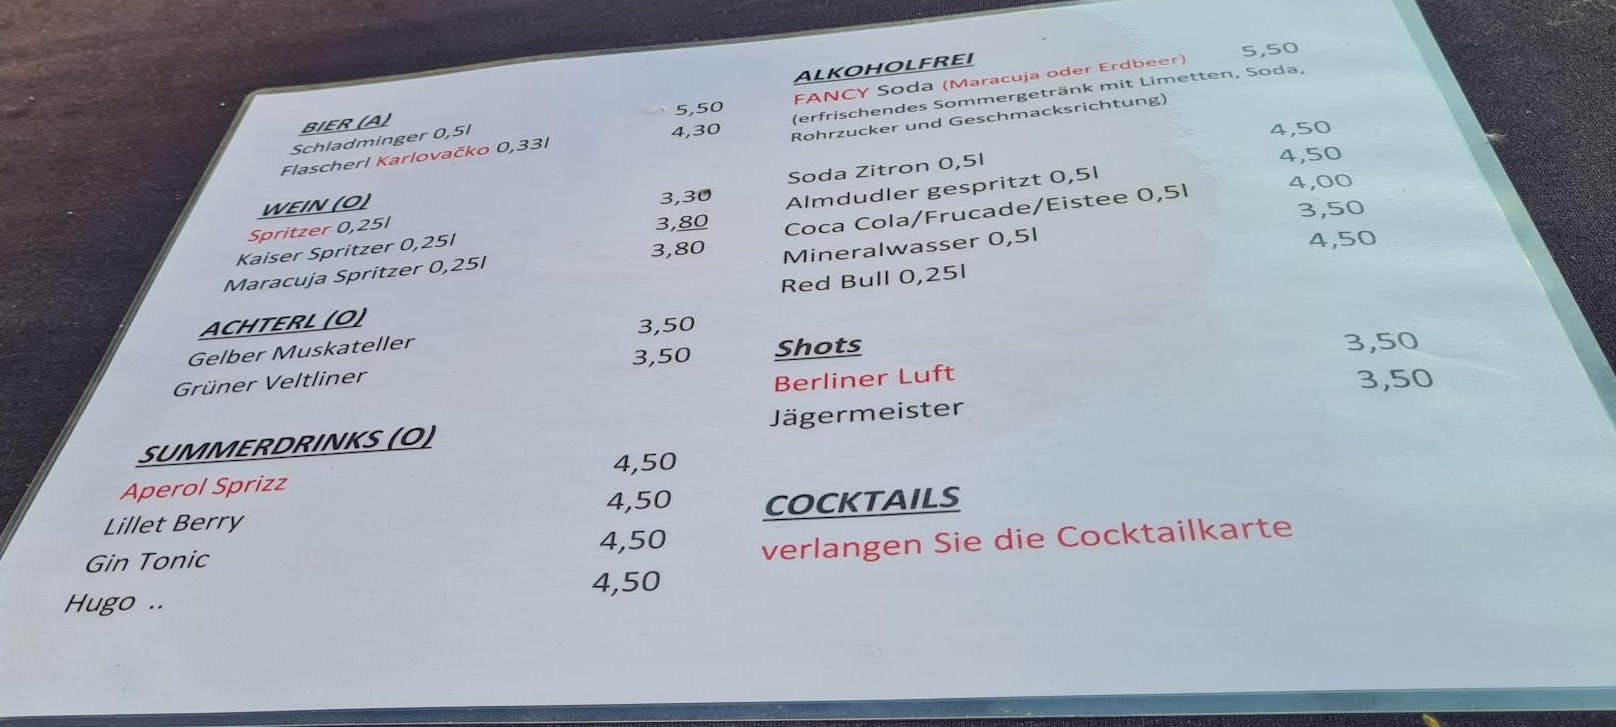 Alkoholfreie Getränke kosteten 4 Euro.